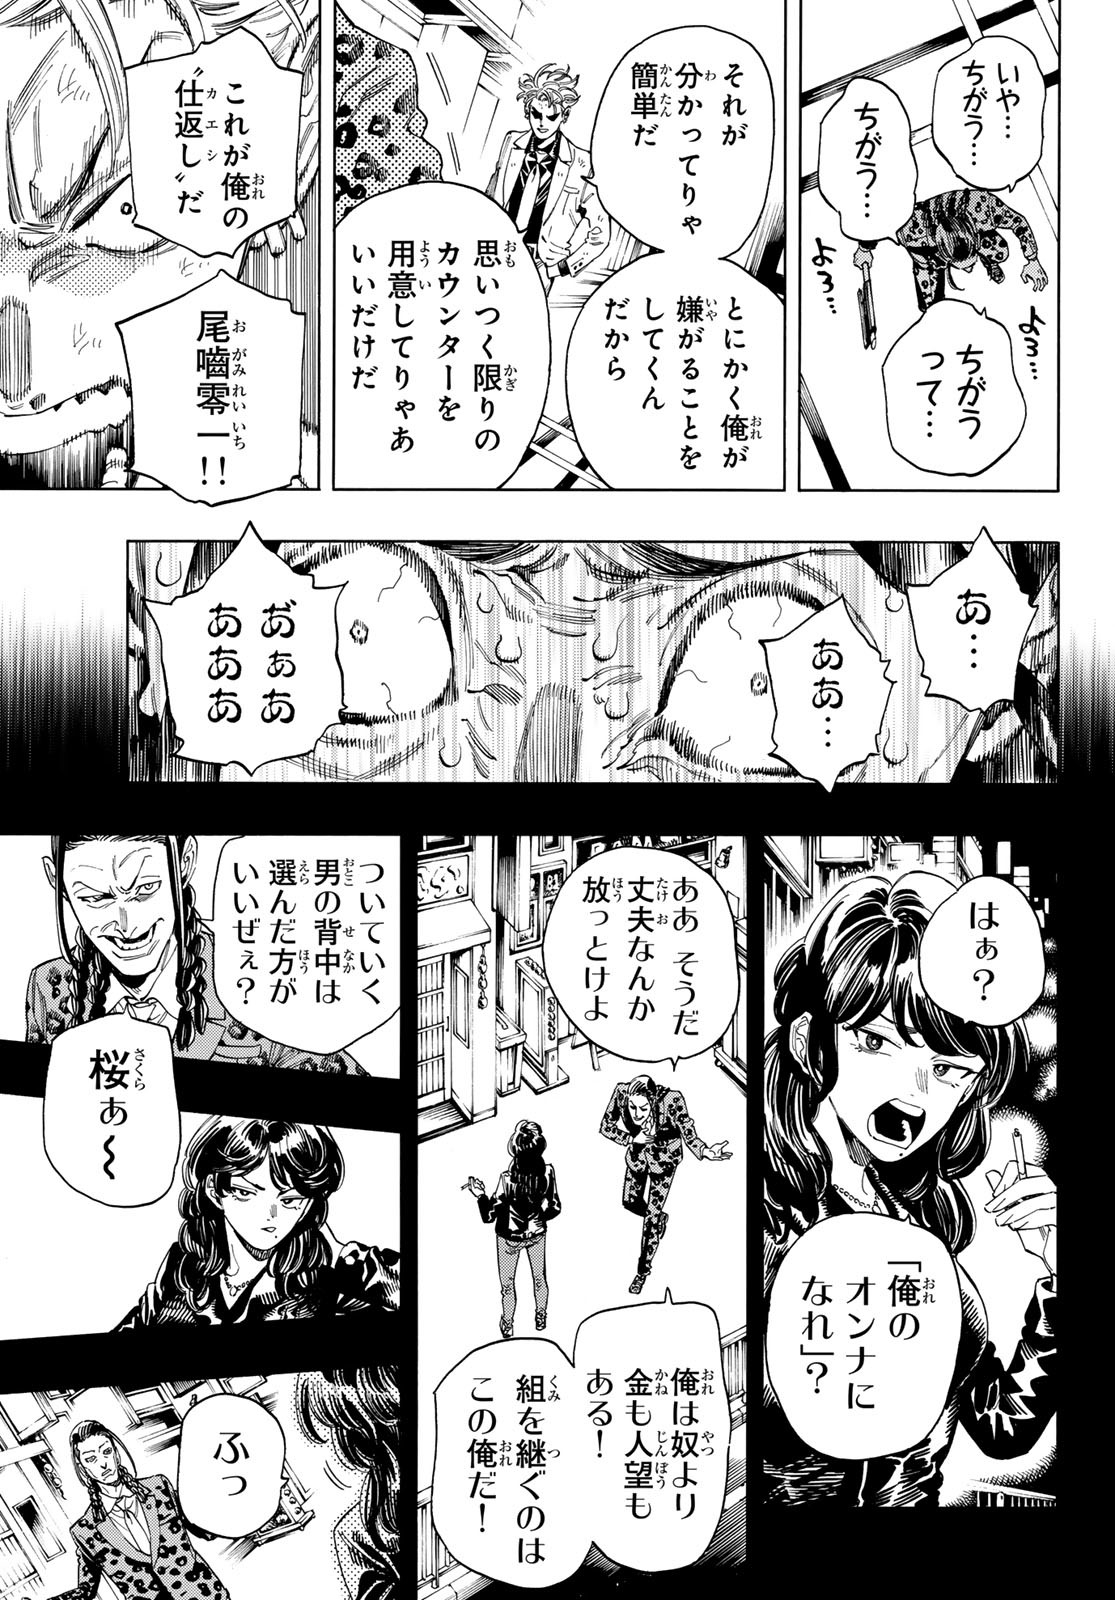 Akabane Honeko no Bodyguard - Chapter 61 - Page 19